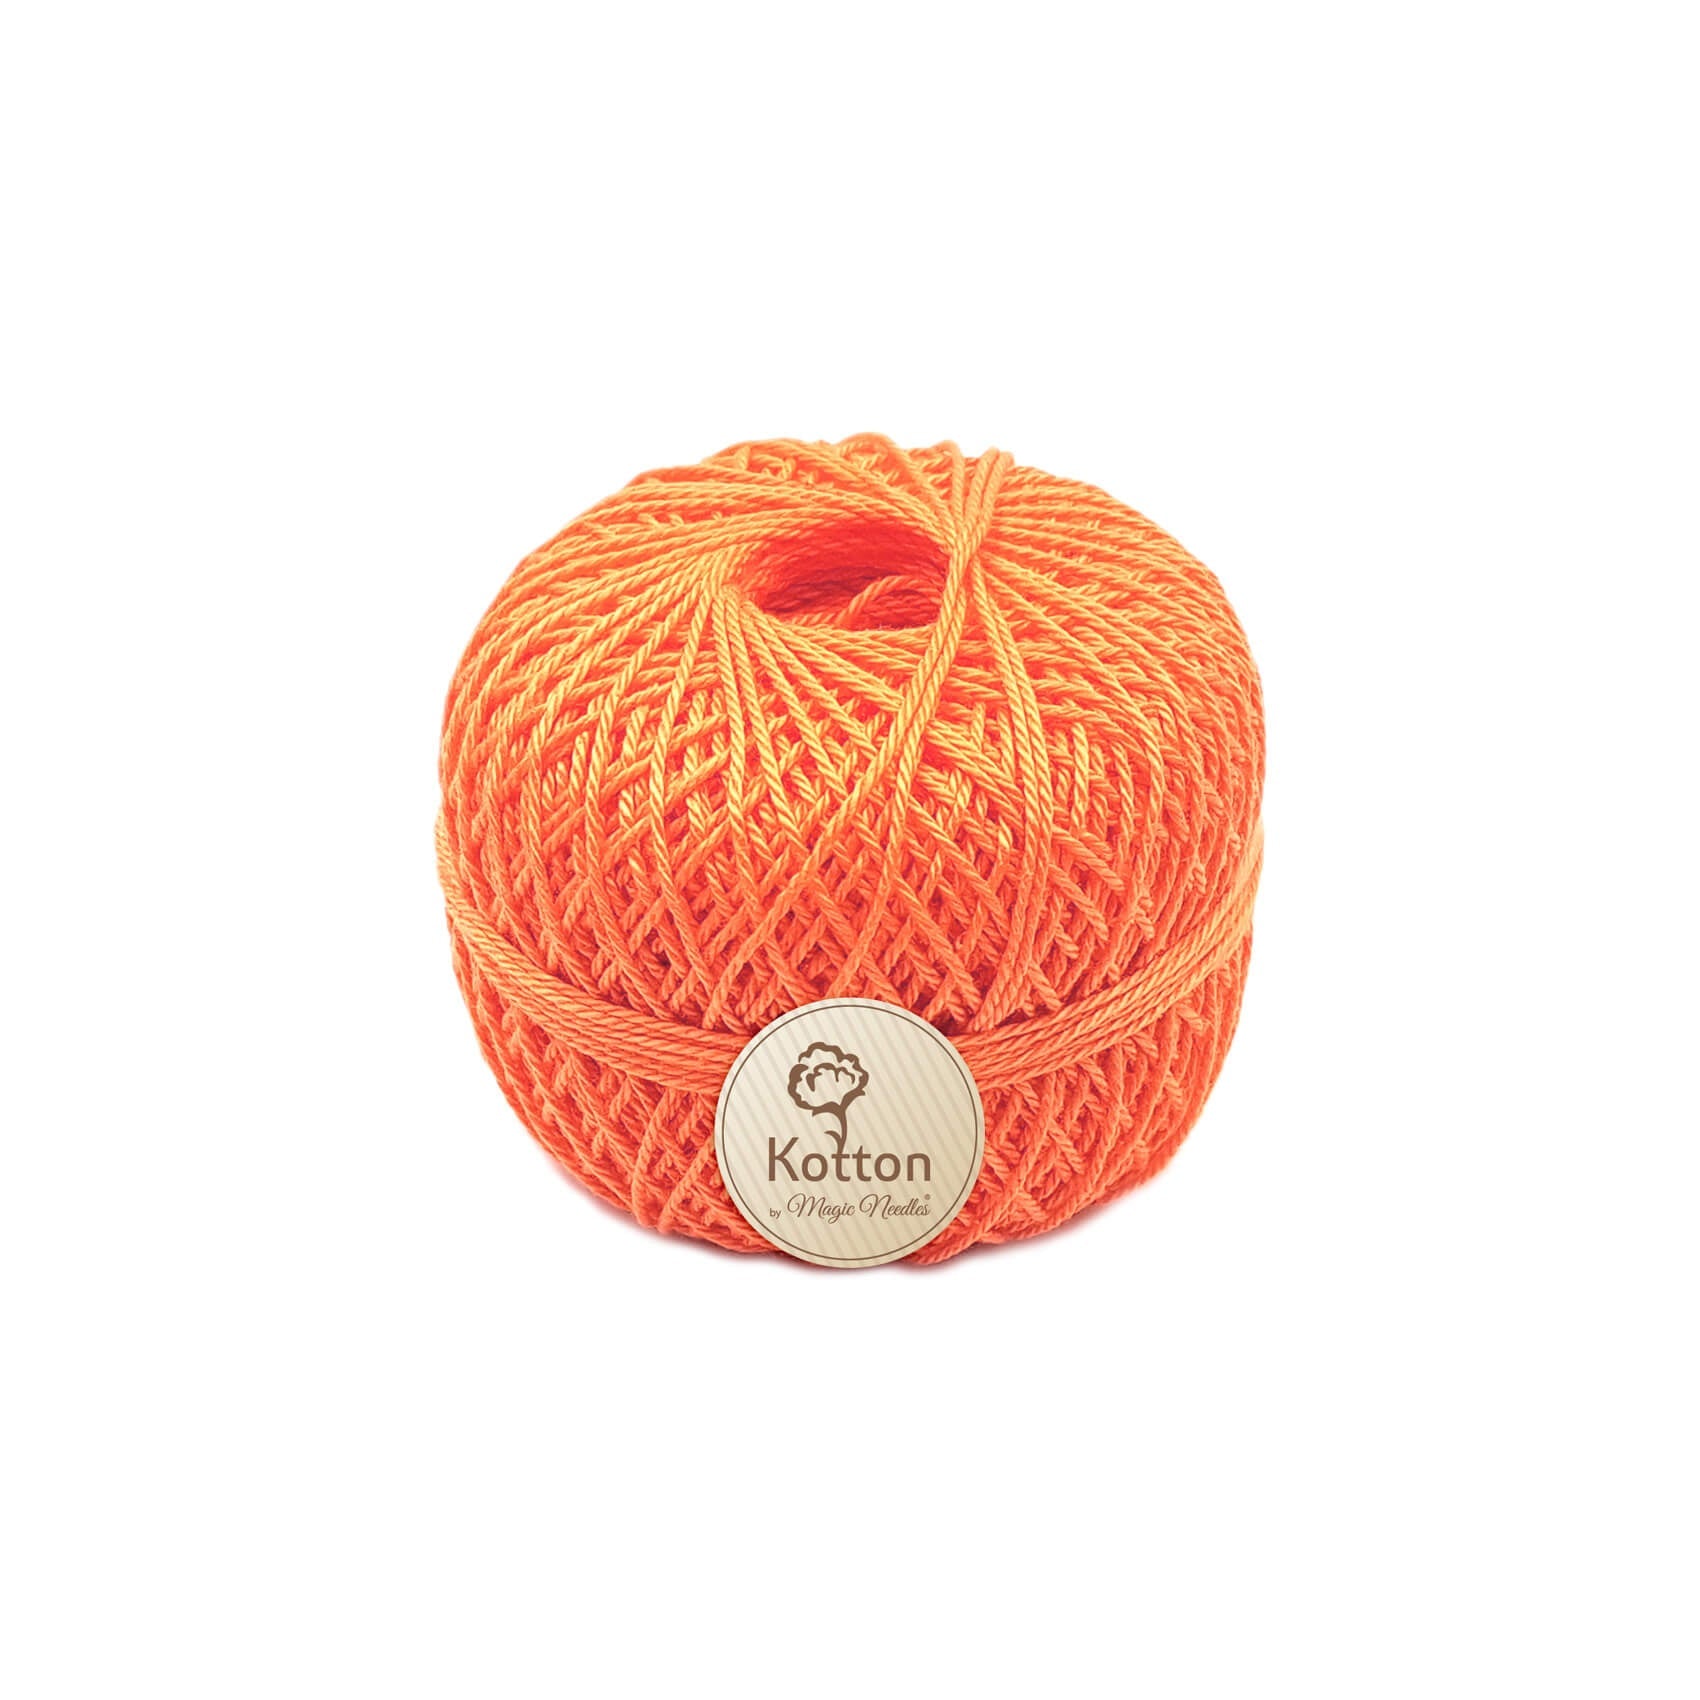 Kotton 3 ply Mercerised Cotton Yarn - Coral Orange 28